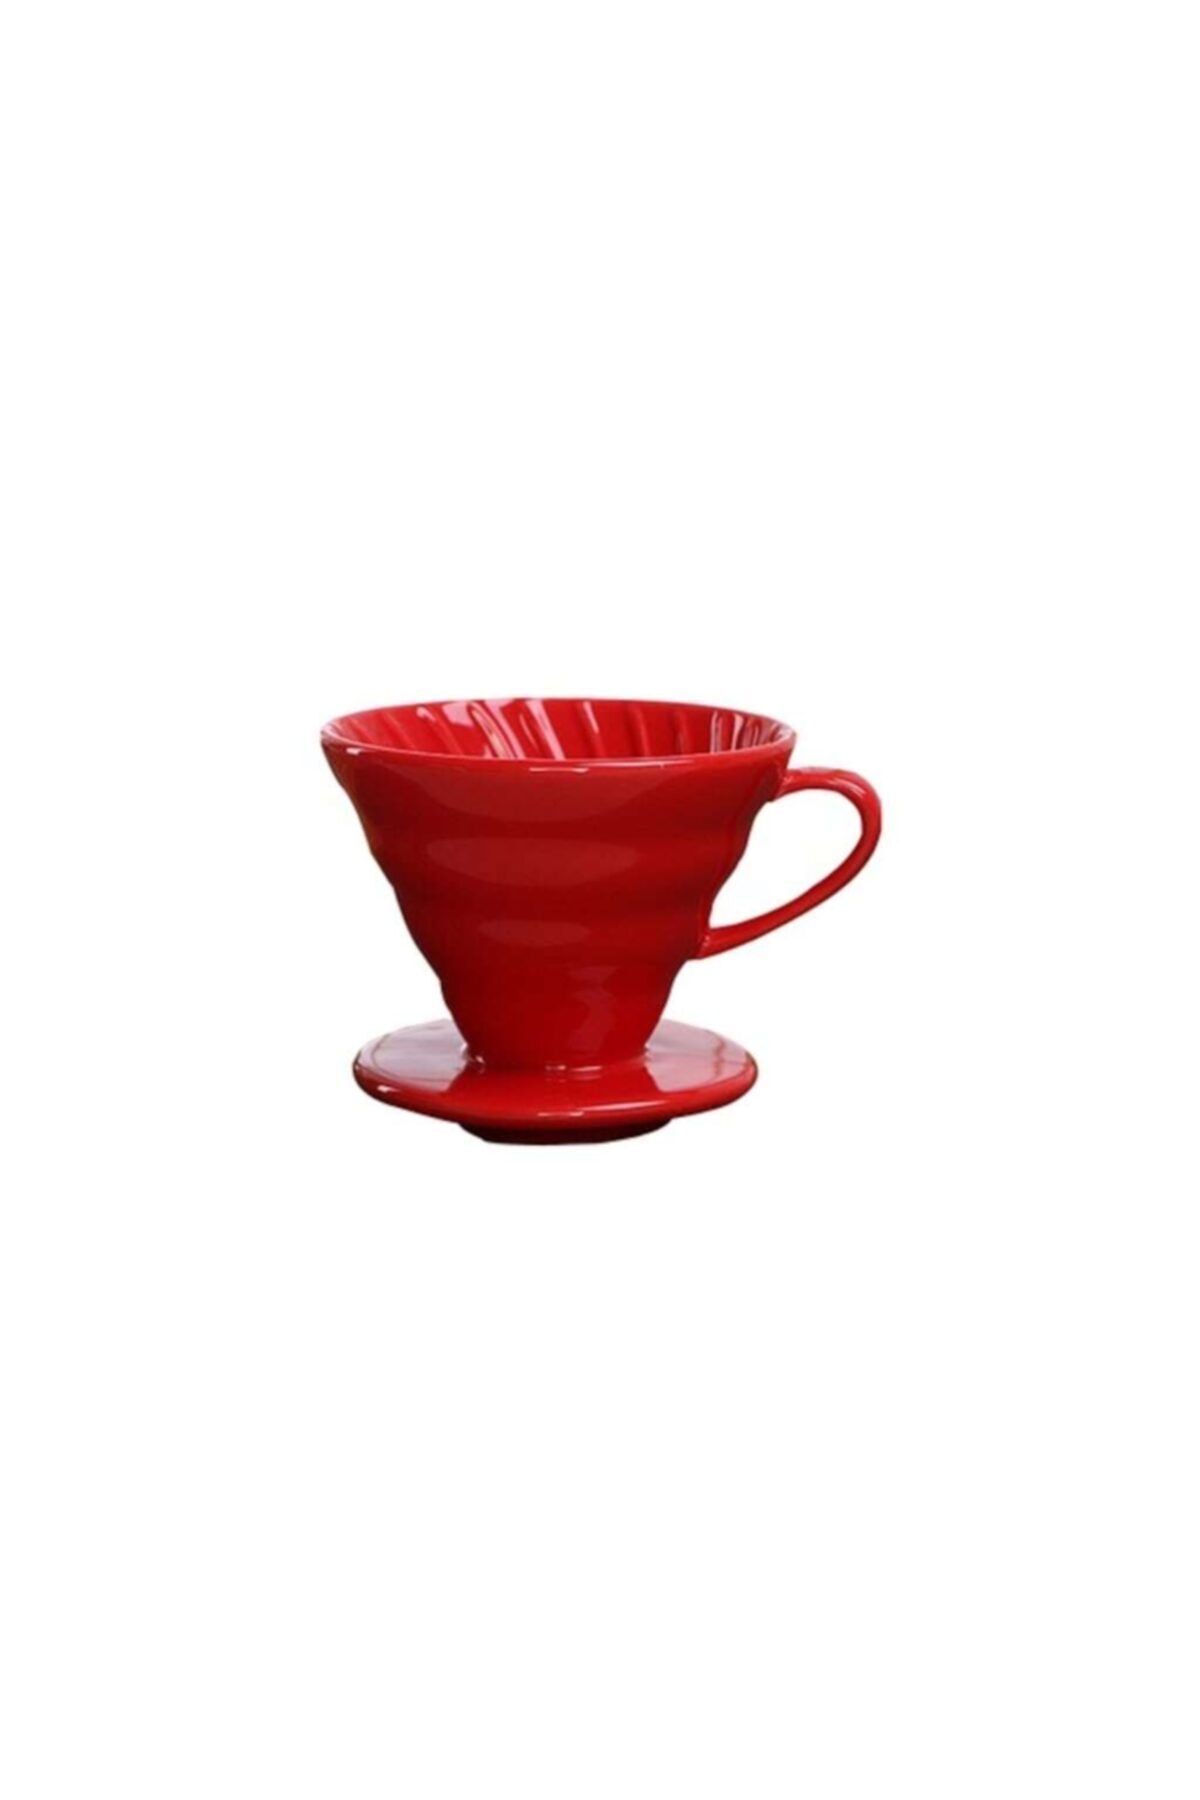 Epinox V60 02 Seramik Kahve Demleme Ekipmanı (kırmızı) Ceramic Coffee Dripper V60 02 (red)